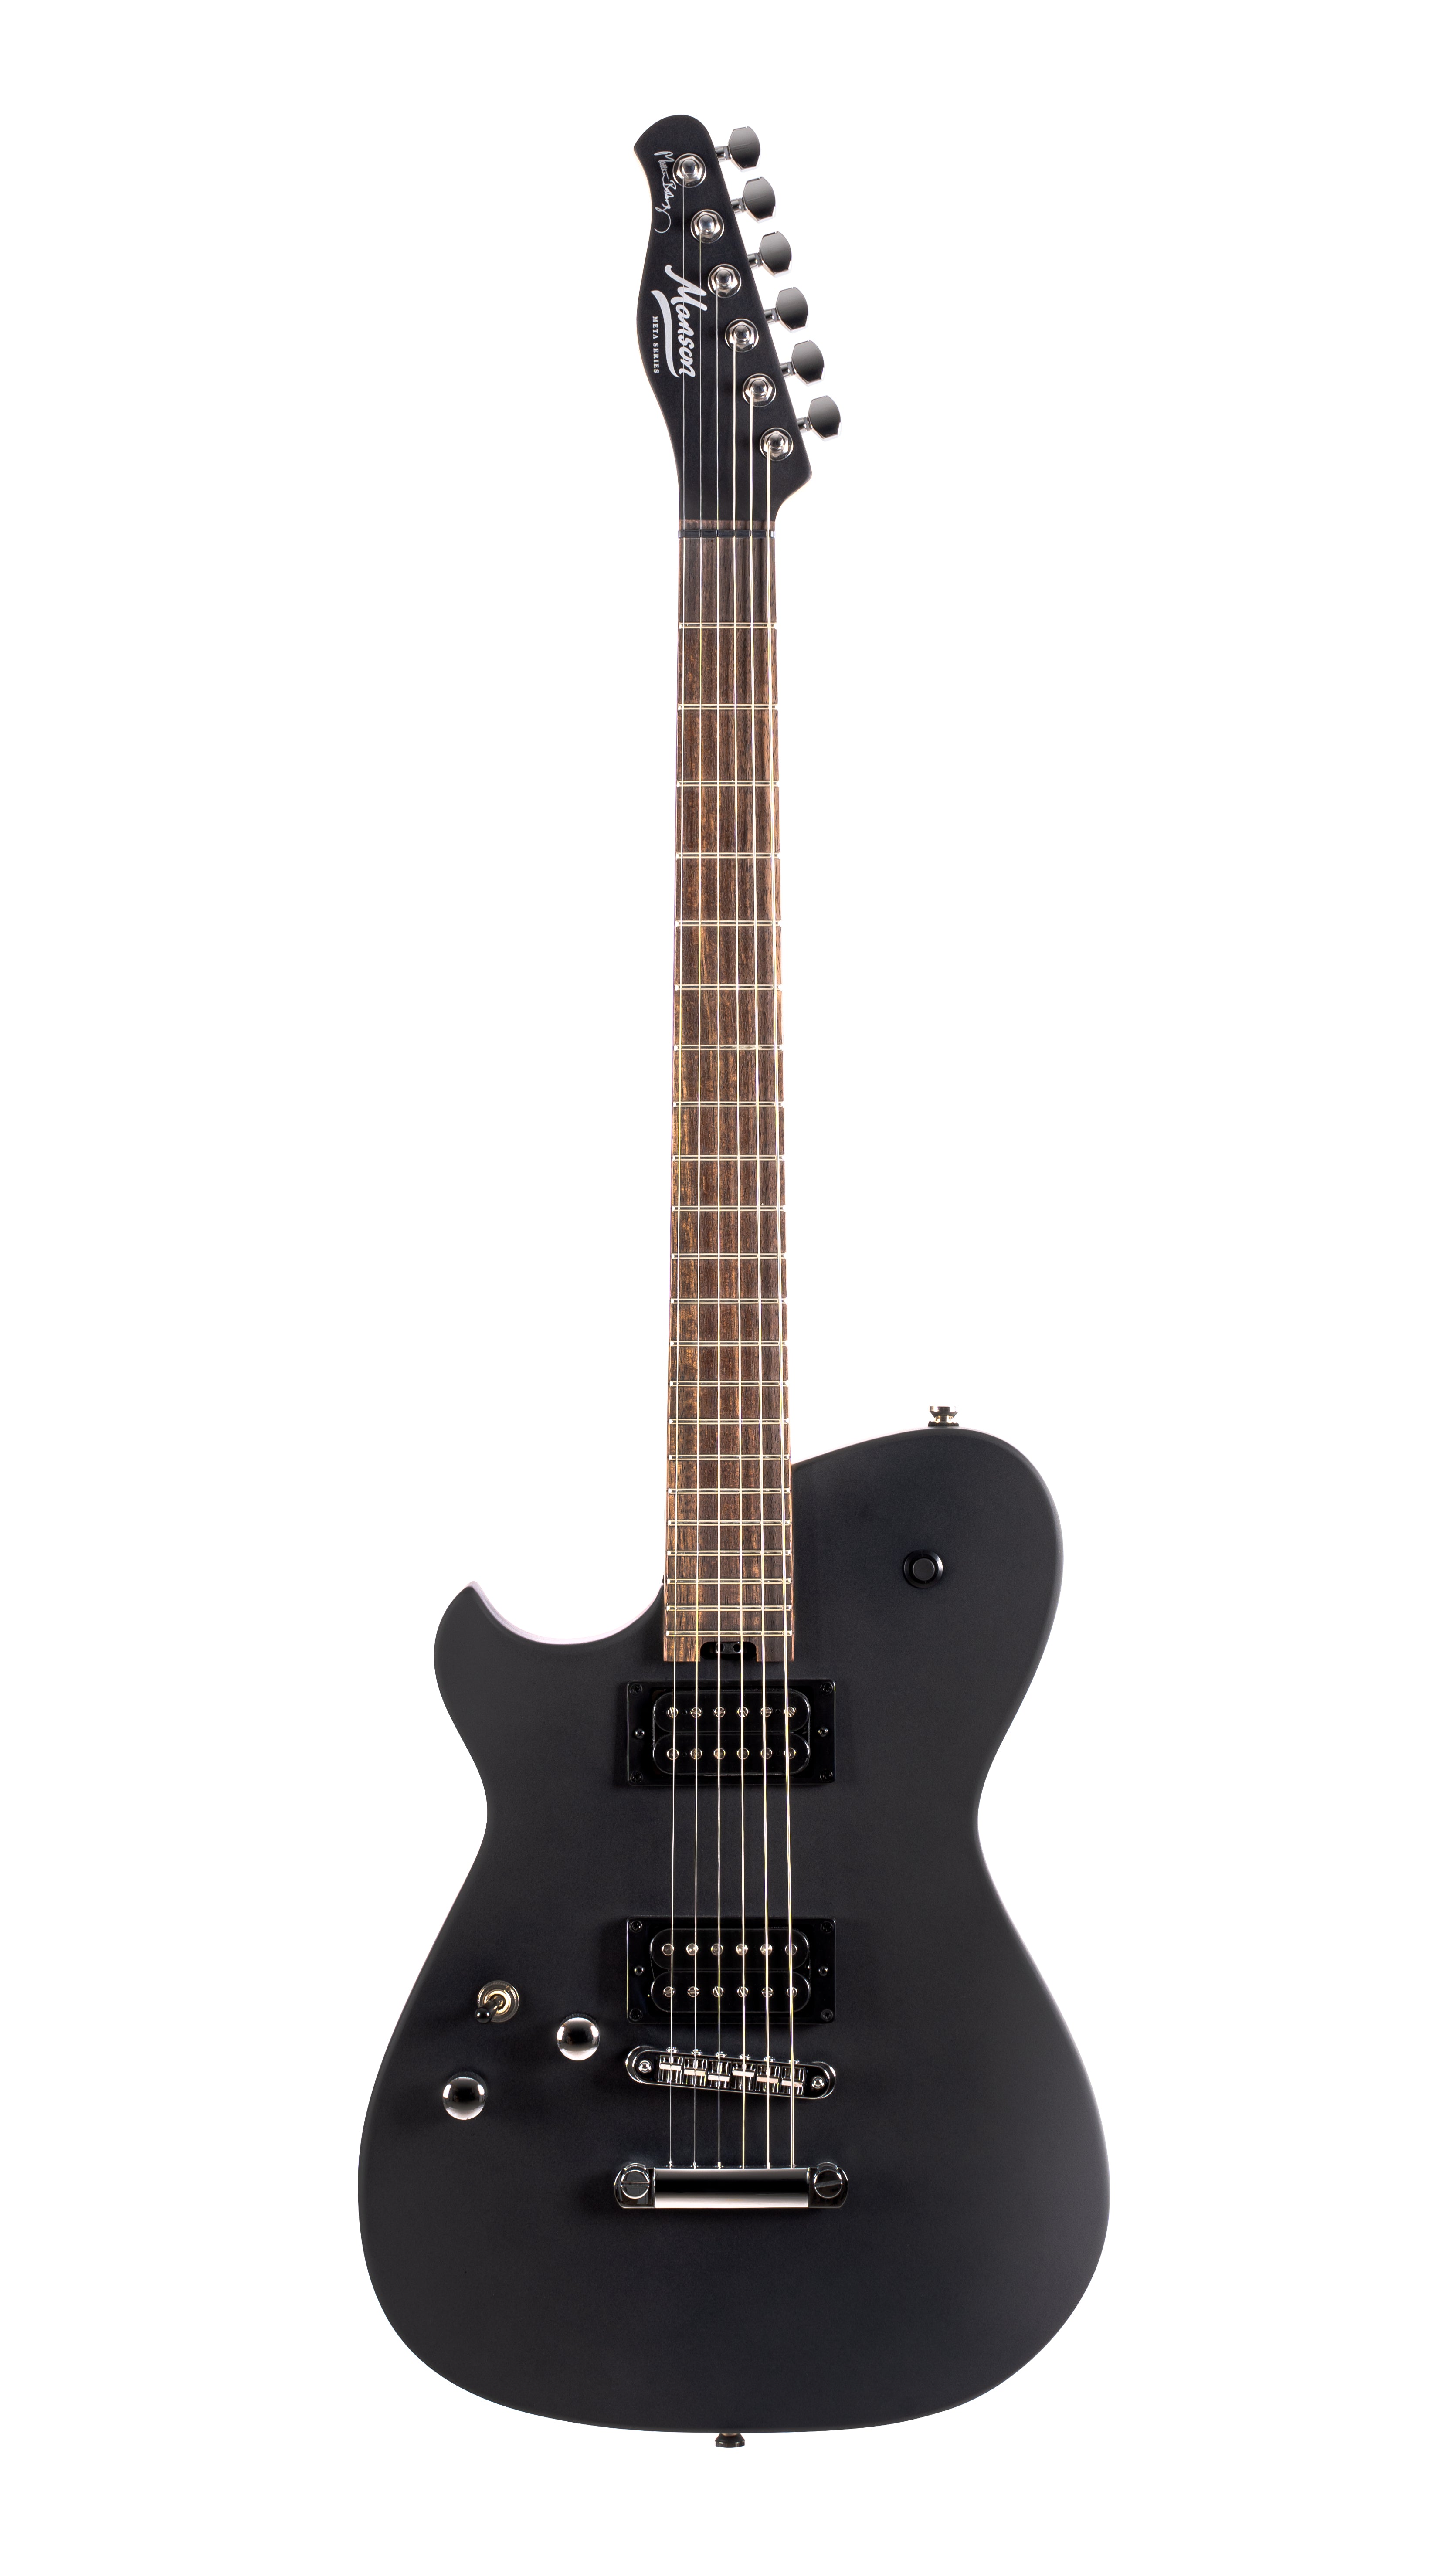 Manson Meta Series MBM-2H Left Handed Satin Black, Electric Guitar for sale at Richards Guitars.